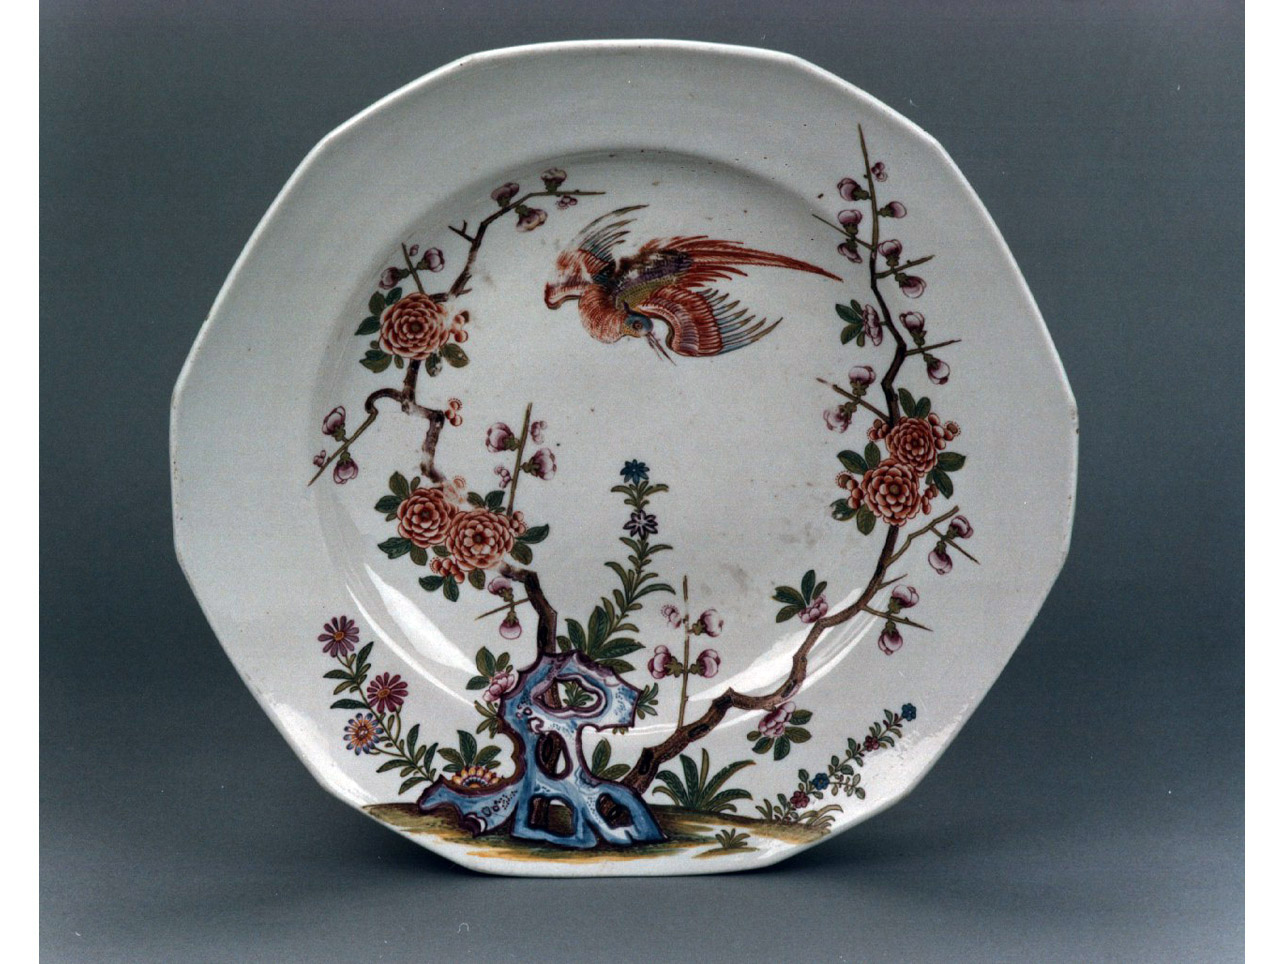 motivi decorativi vegetali e animali/ animali fantastici (piatto) - manifattura viennese, manifattura Du Paquier (sec. XVIII)